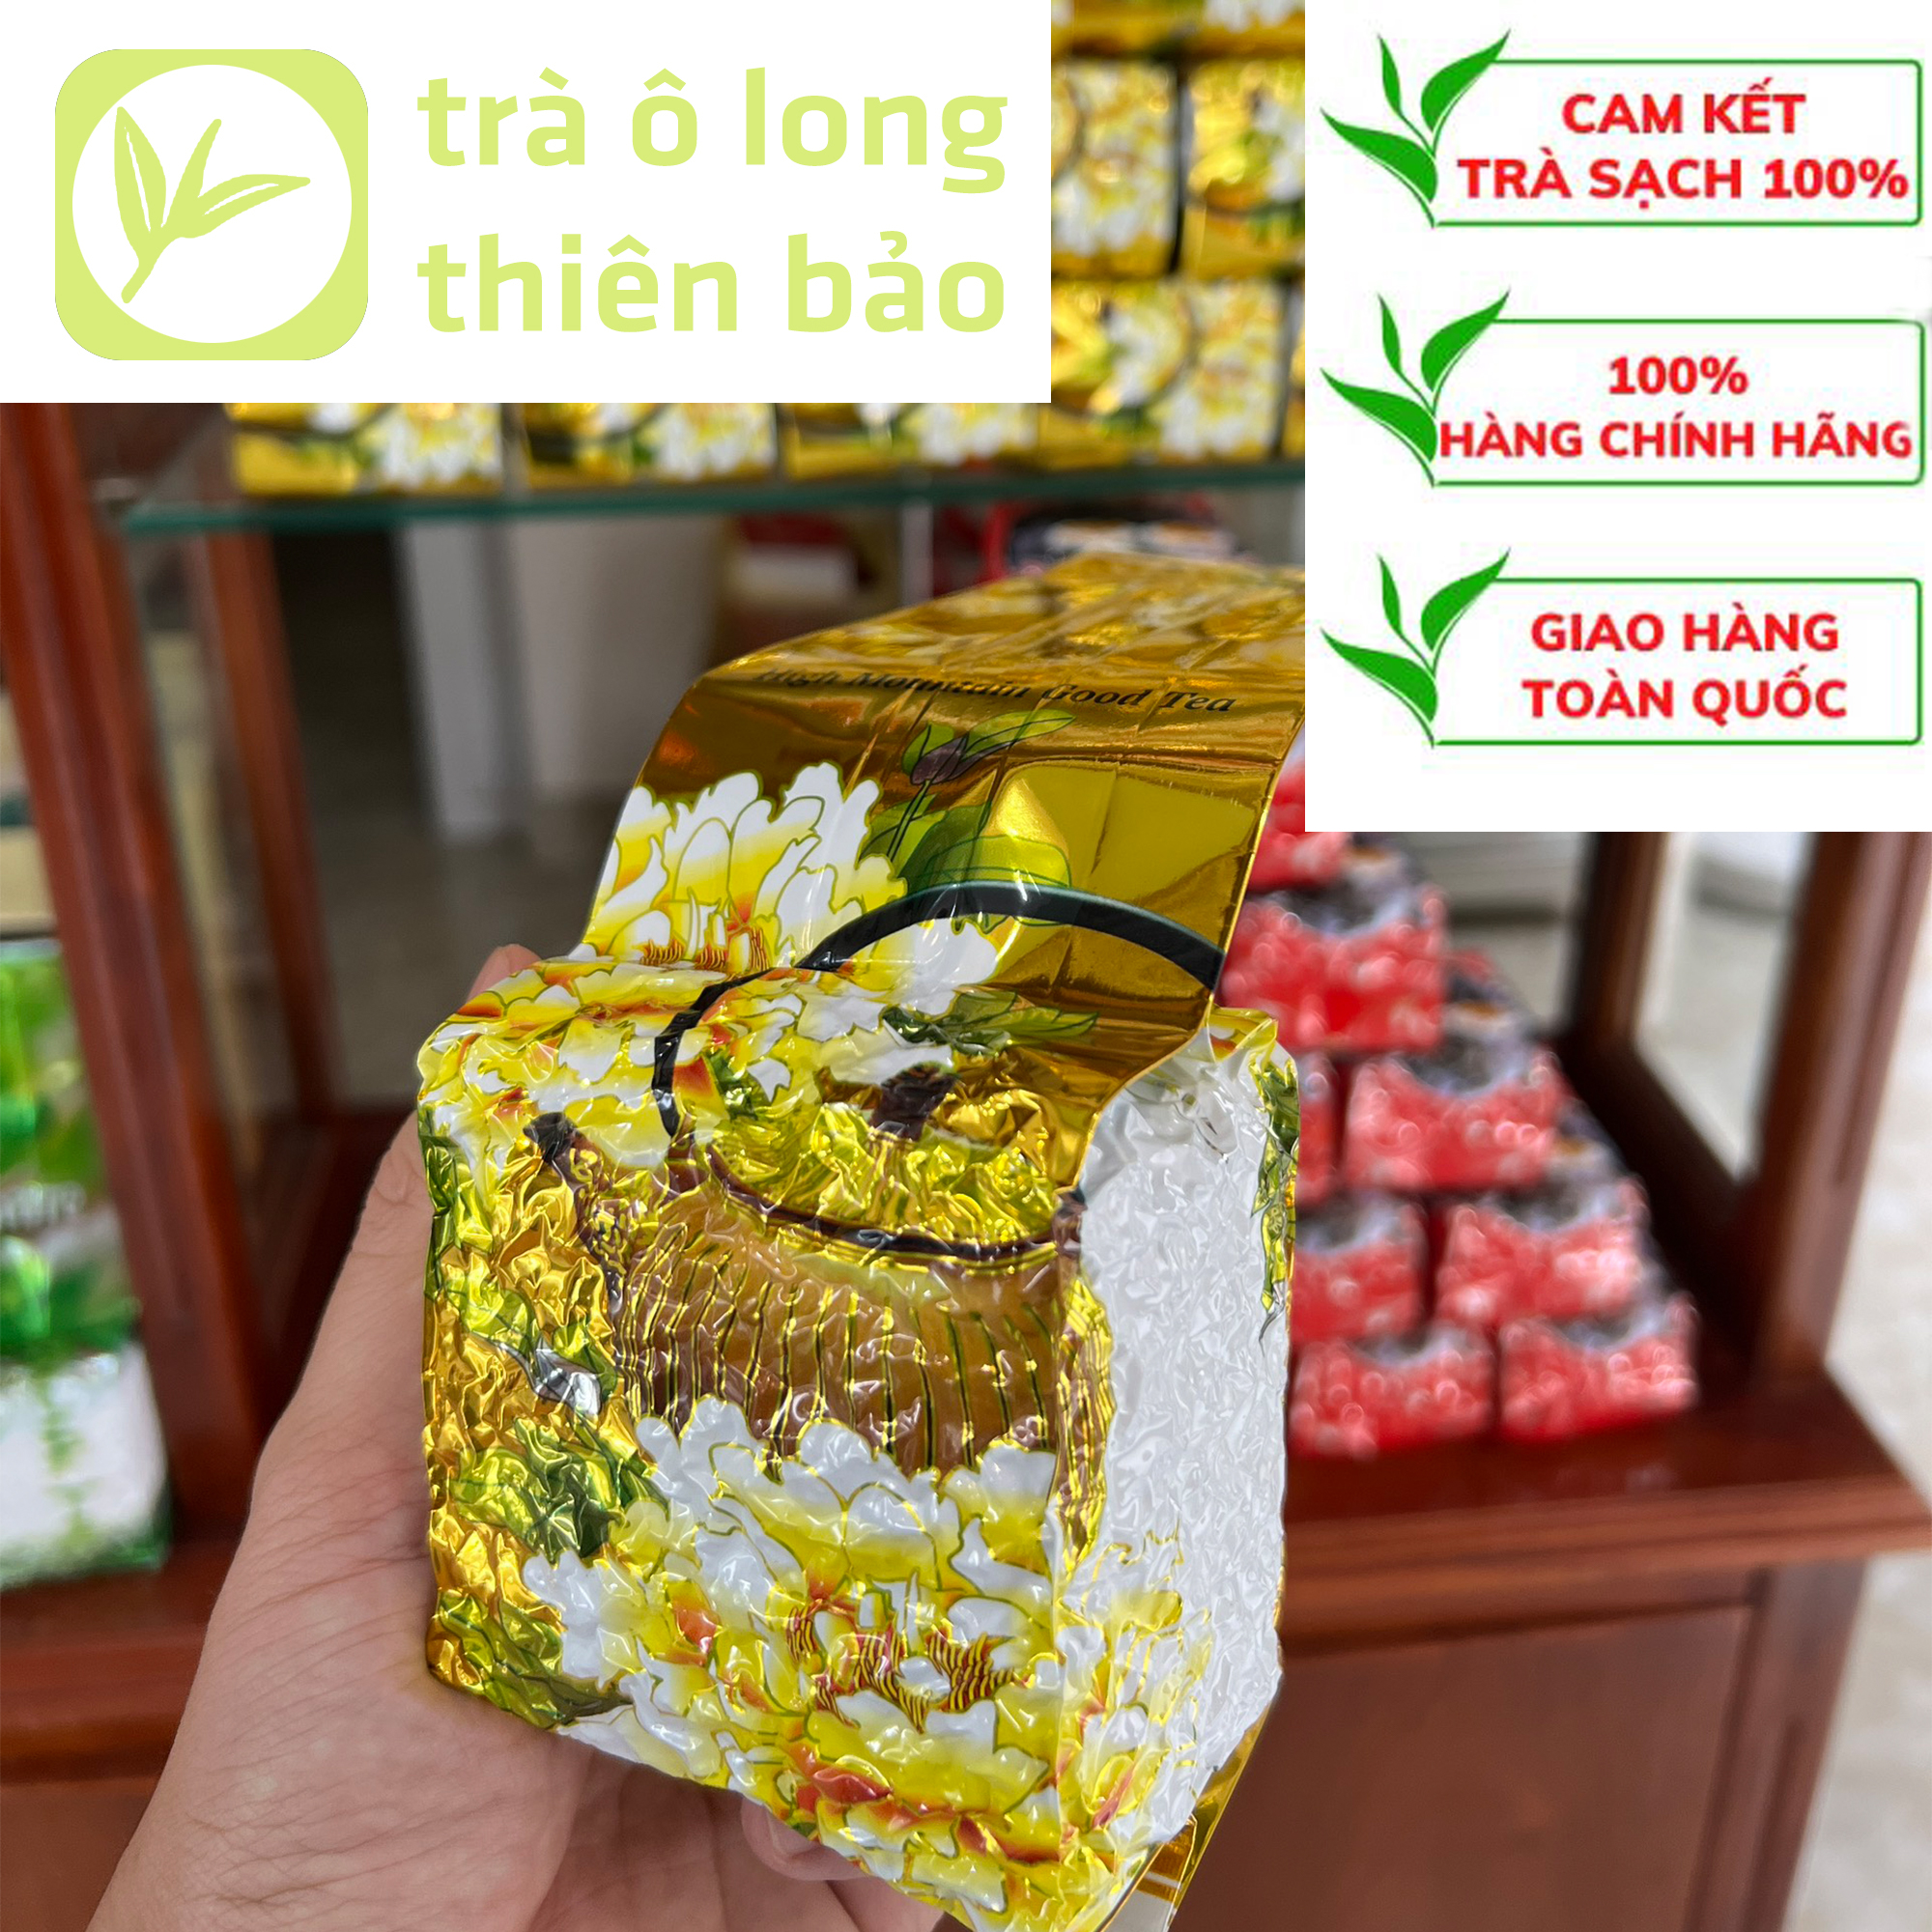 Kim Tuyen L1 Olong Tea 250gr pack Pure Oolong Tea Delicious, mild after